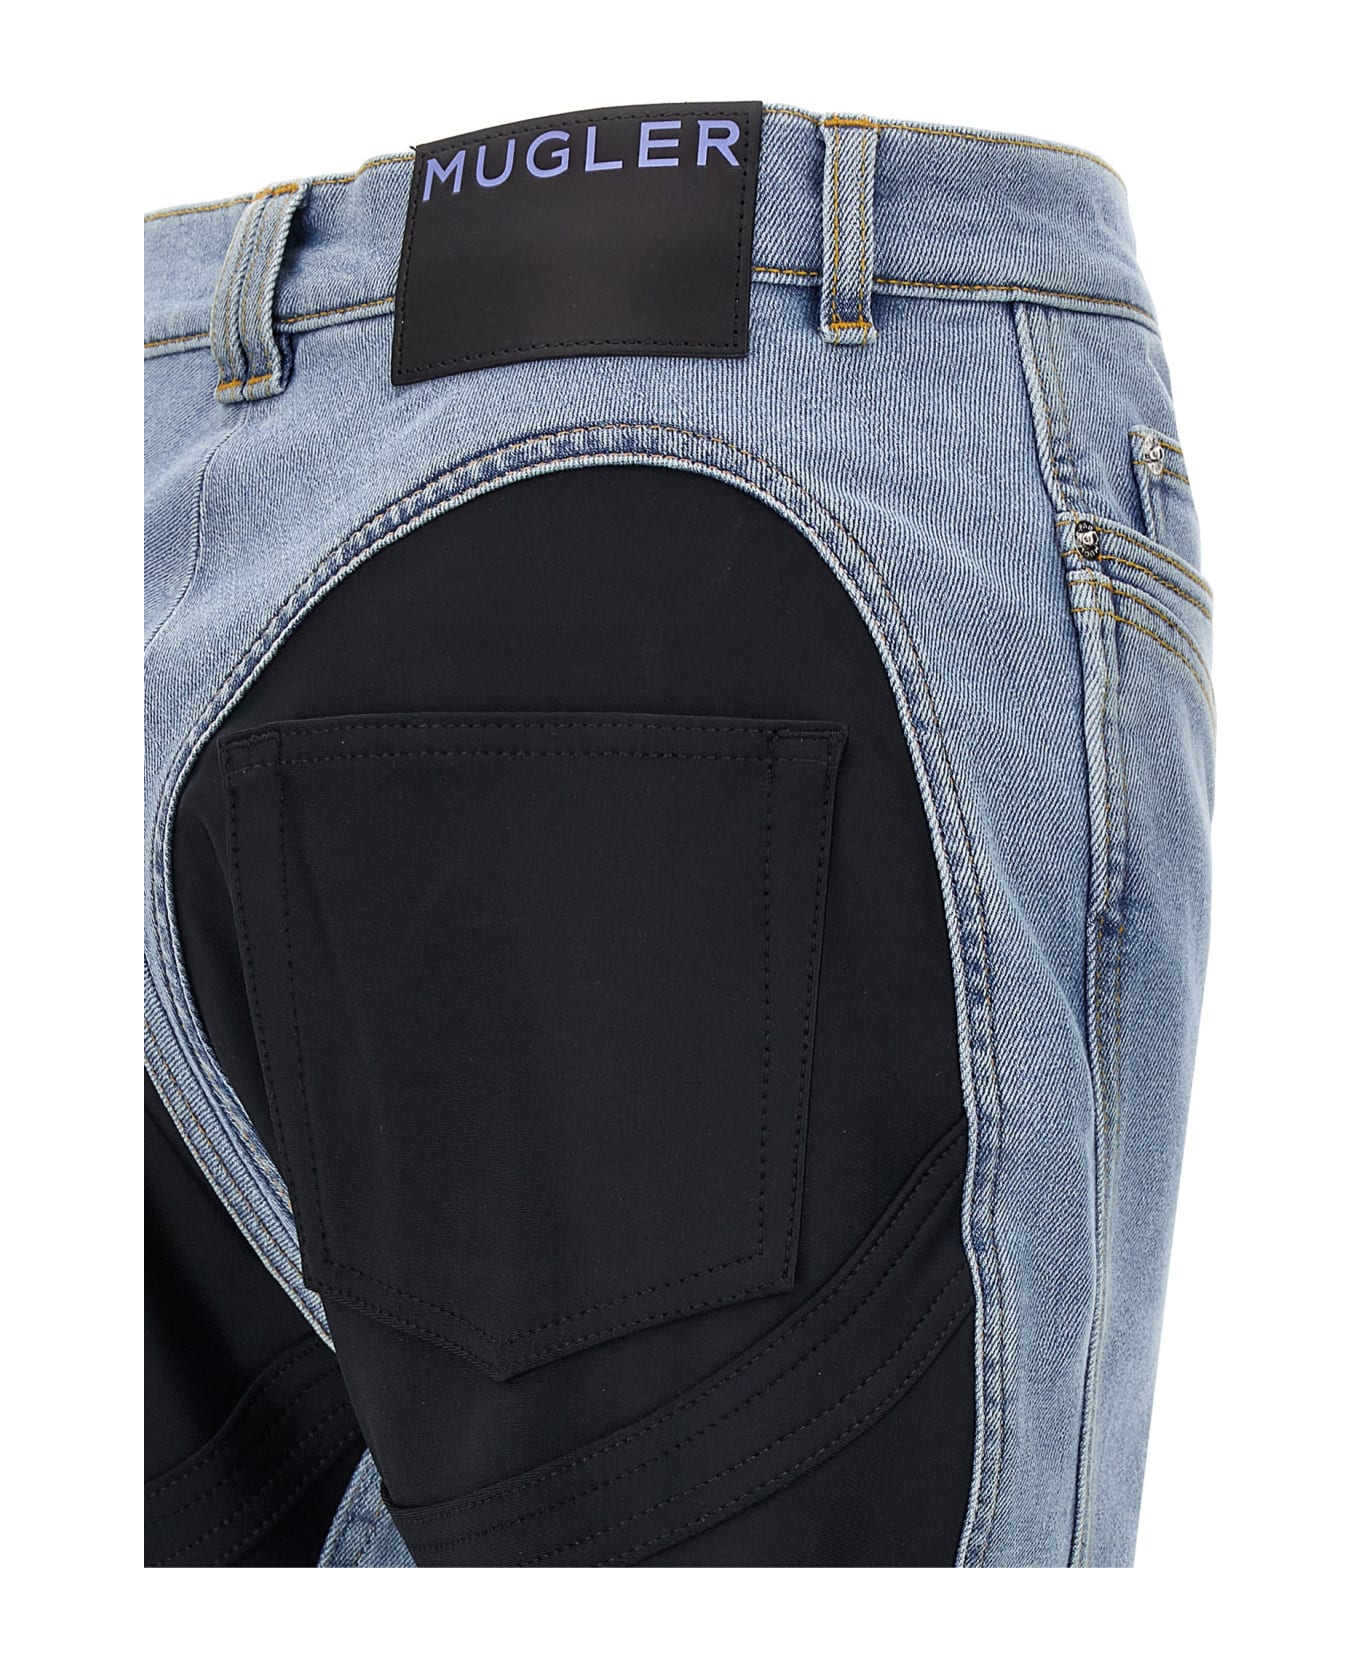 Mugler Stretch Insert Jeans - Light blue/black